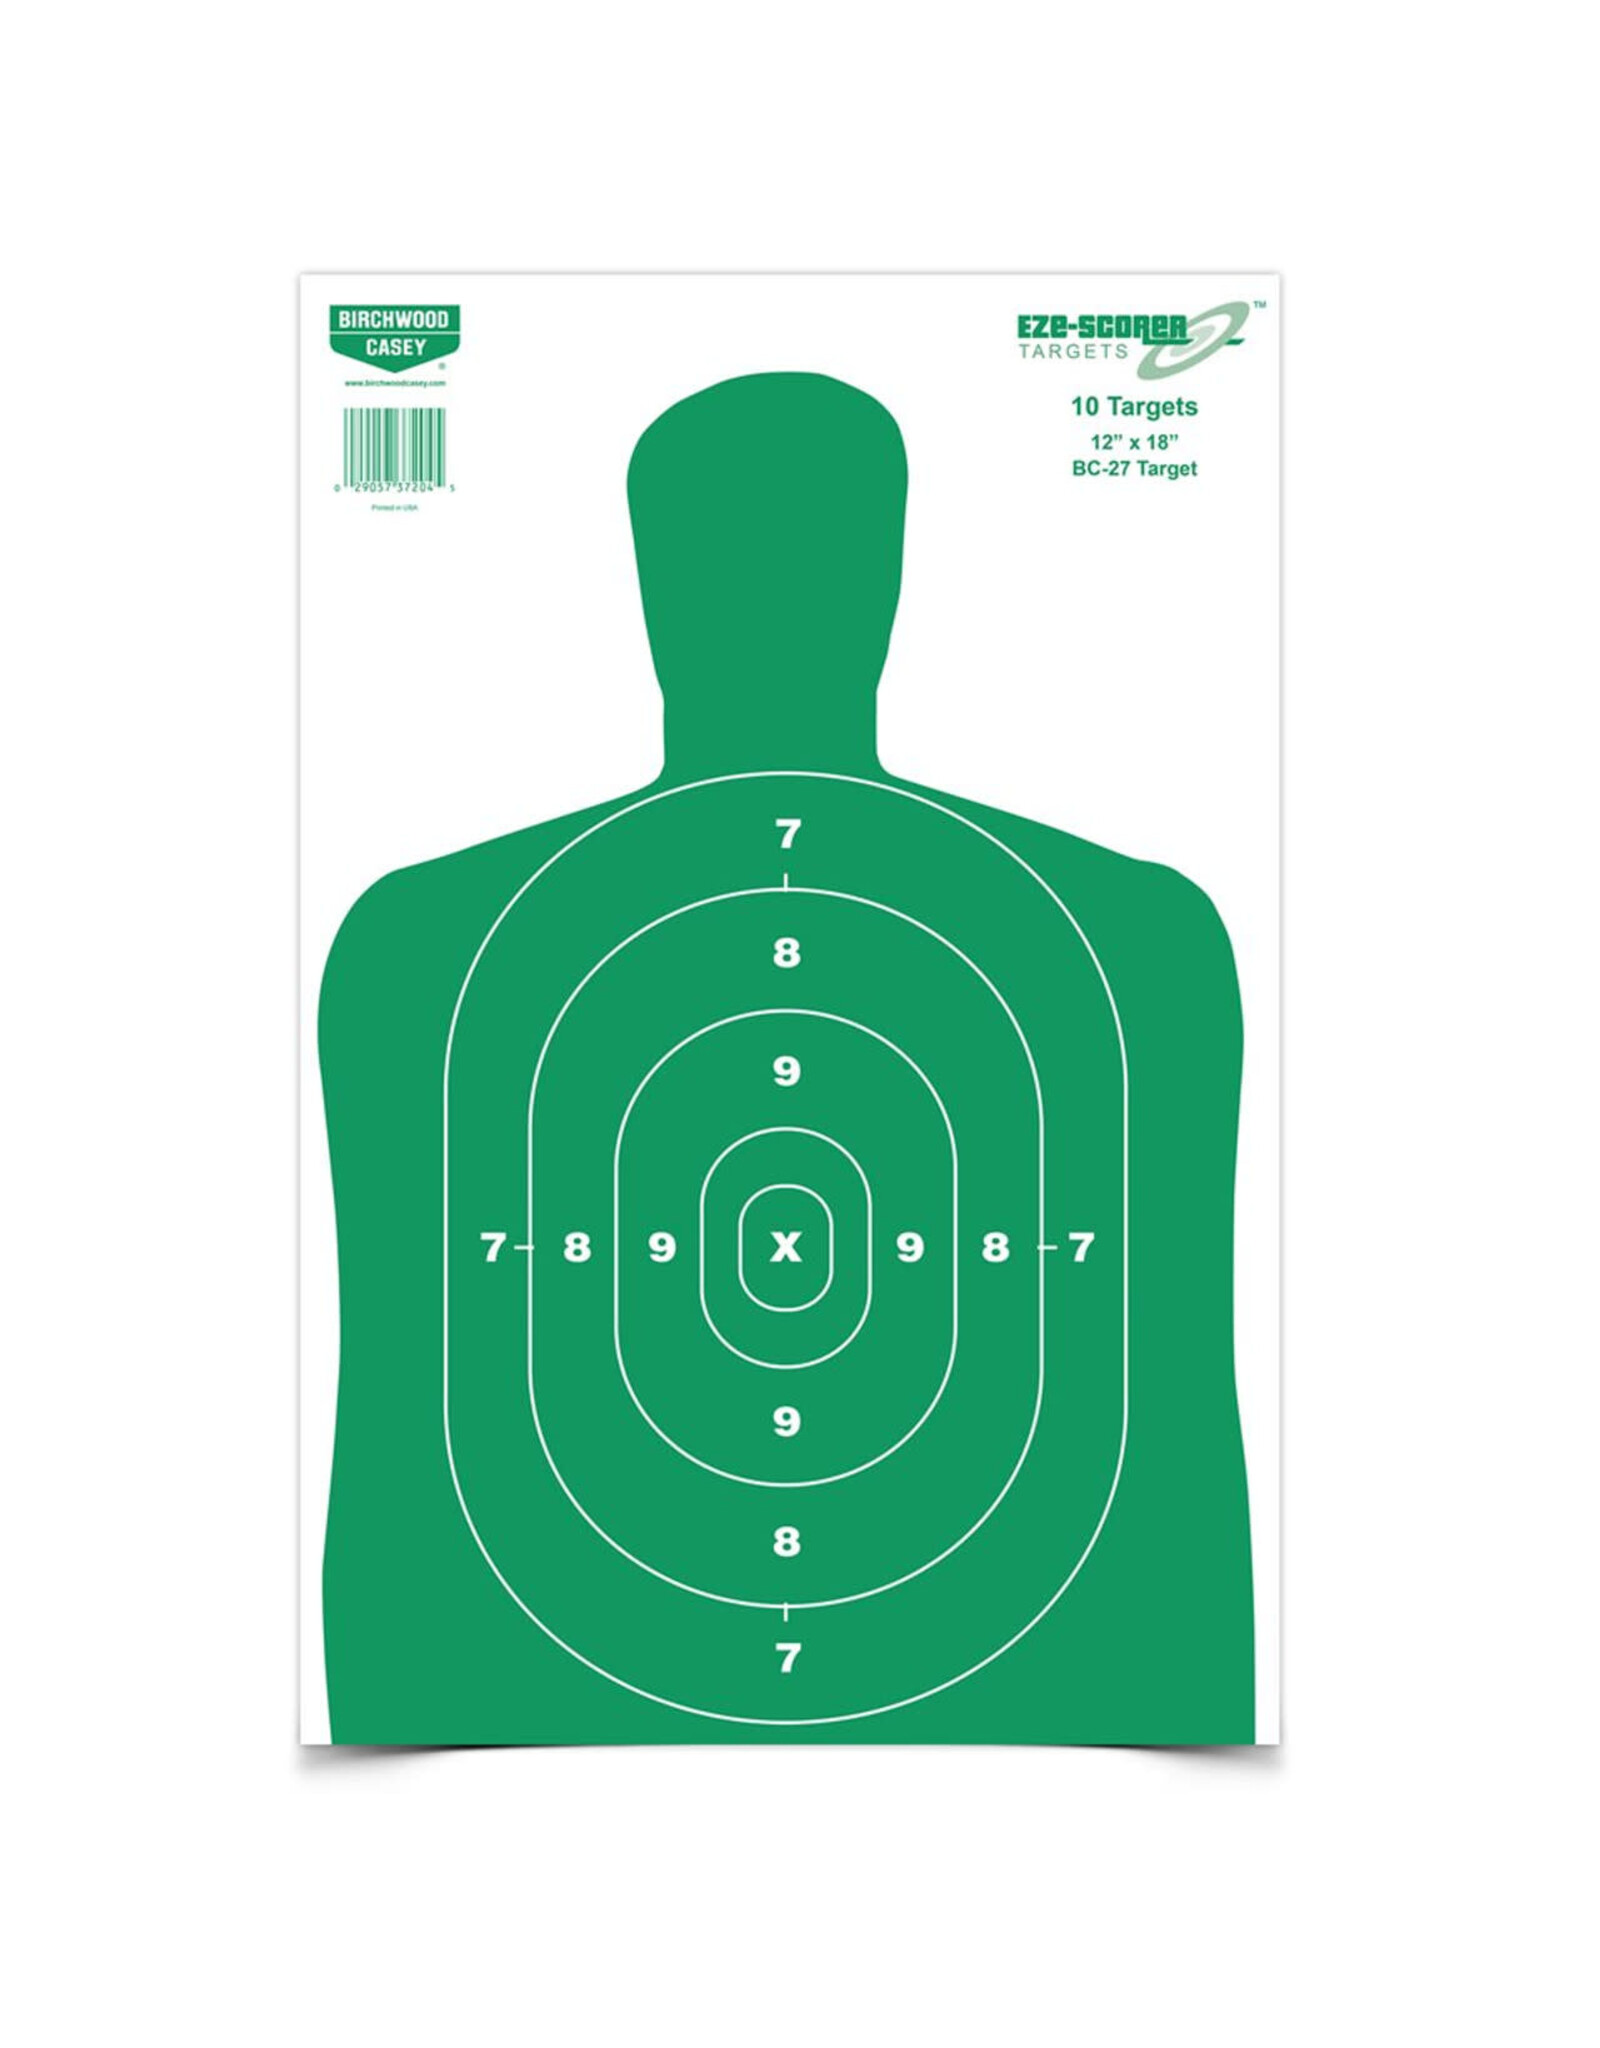 Birchwood Casey Eze-Scorer™12 x 18 BC-27 Green Target, 10 Targets